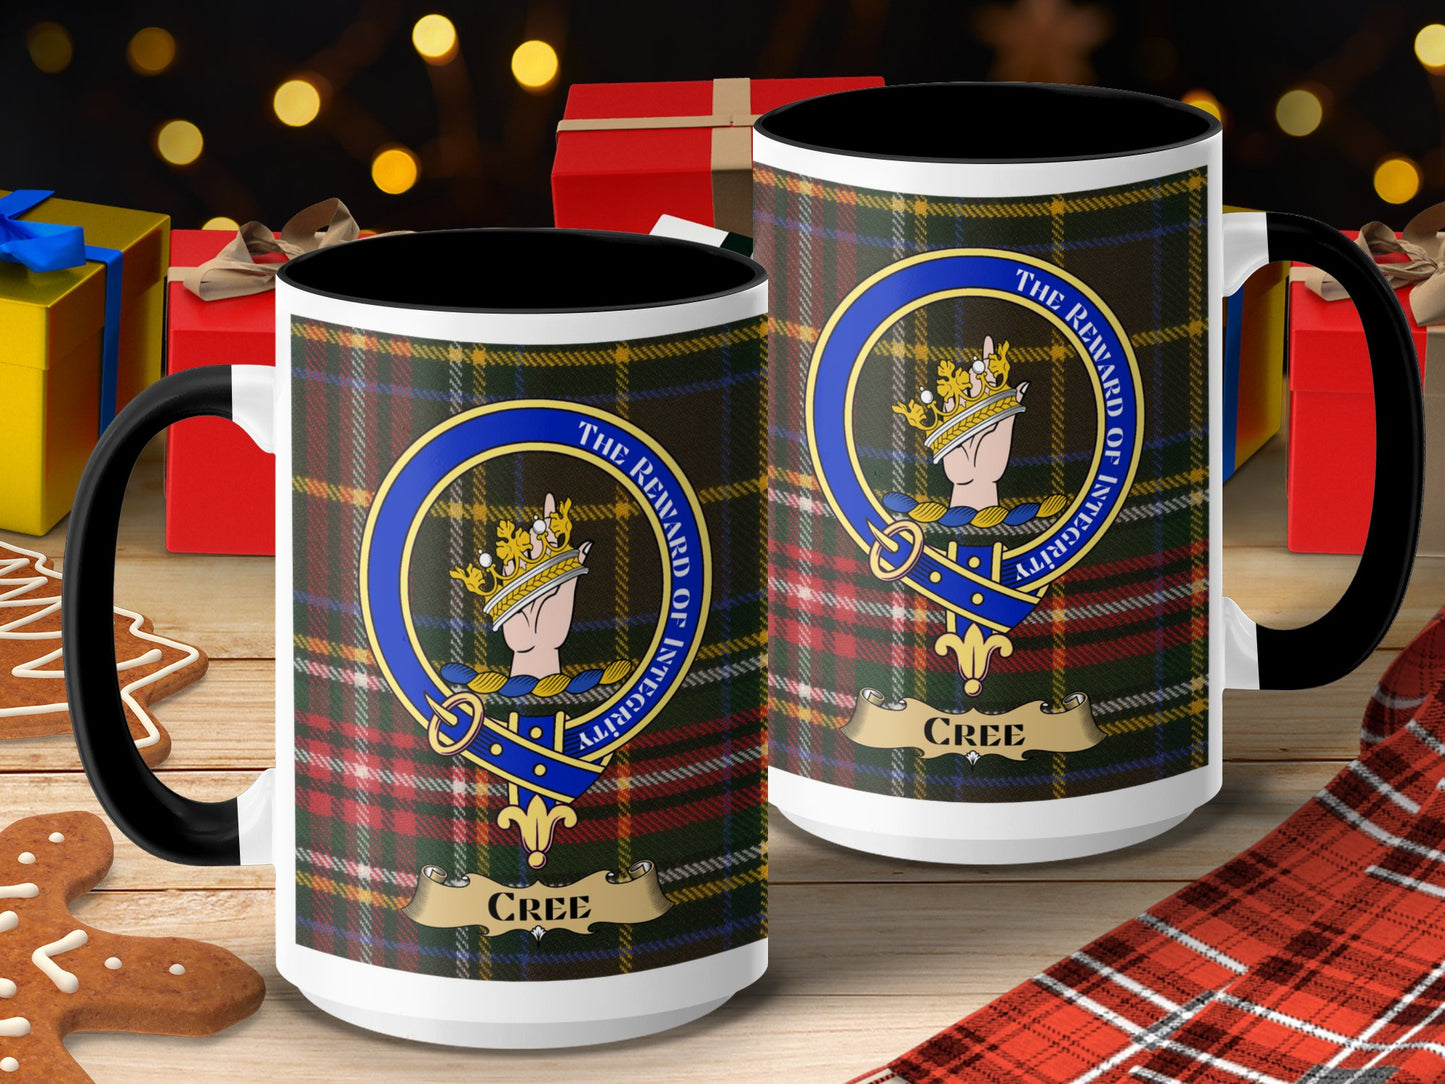 The Clan Cree Scottish Tartan Crest Emblem Mug - Living Stone Gifts